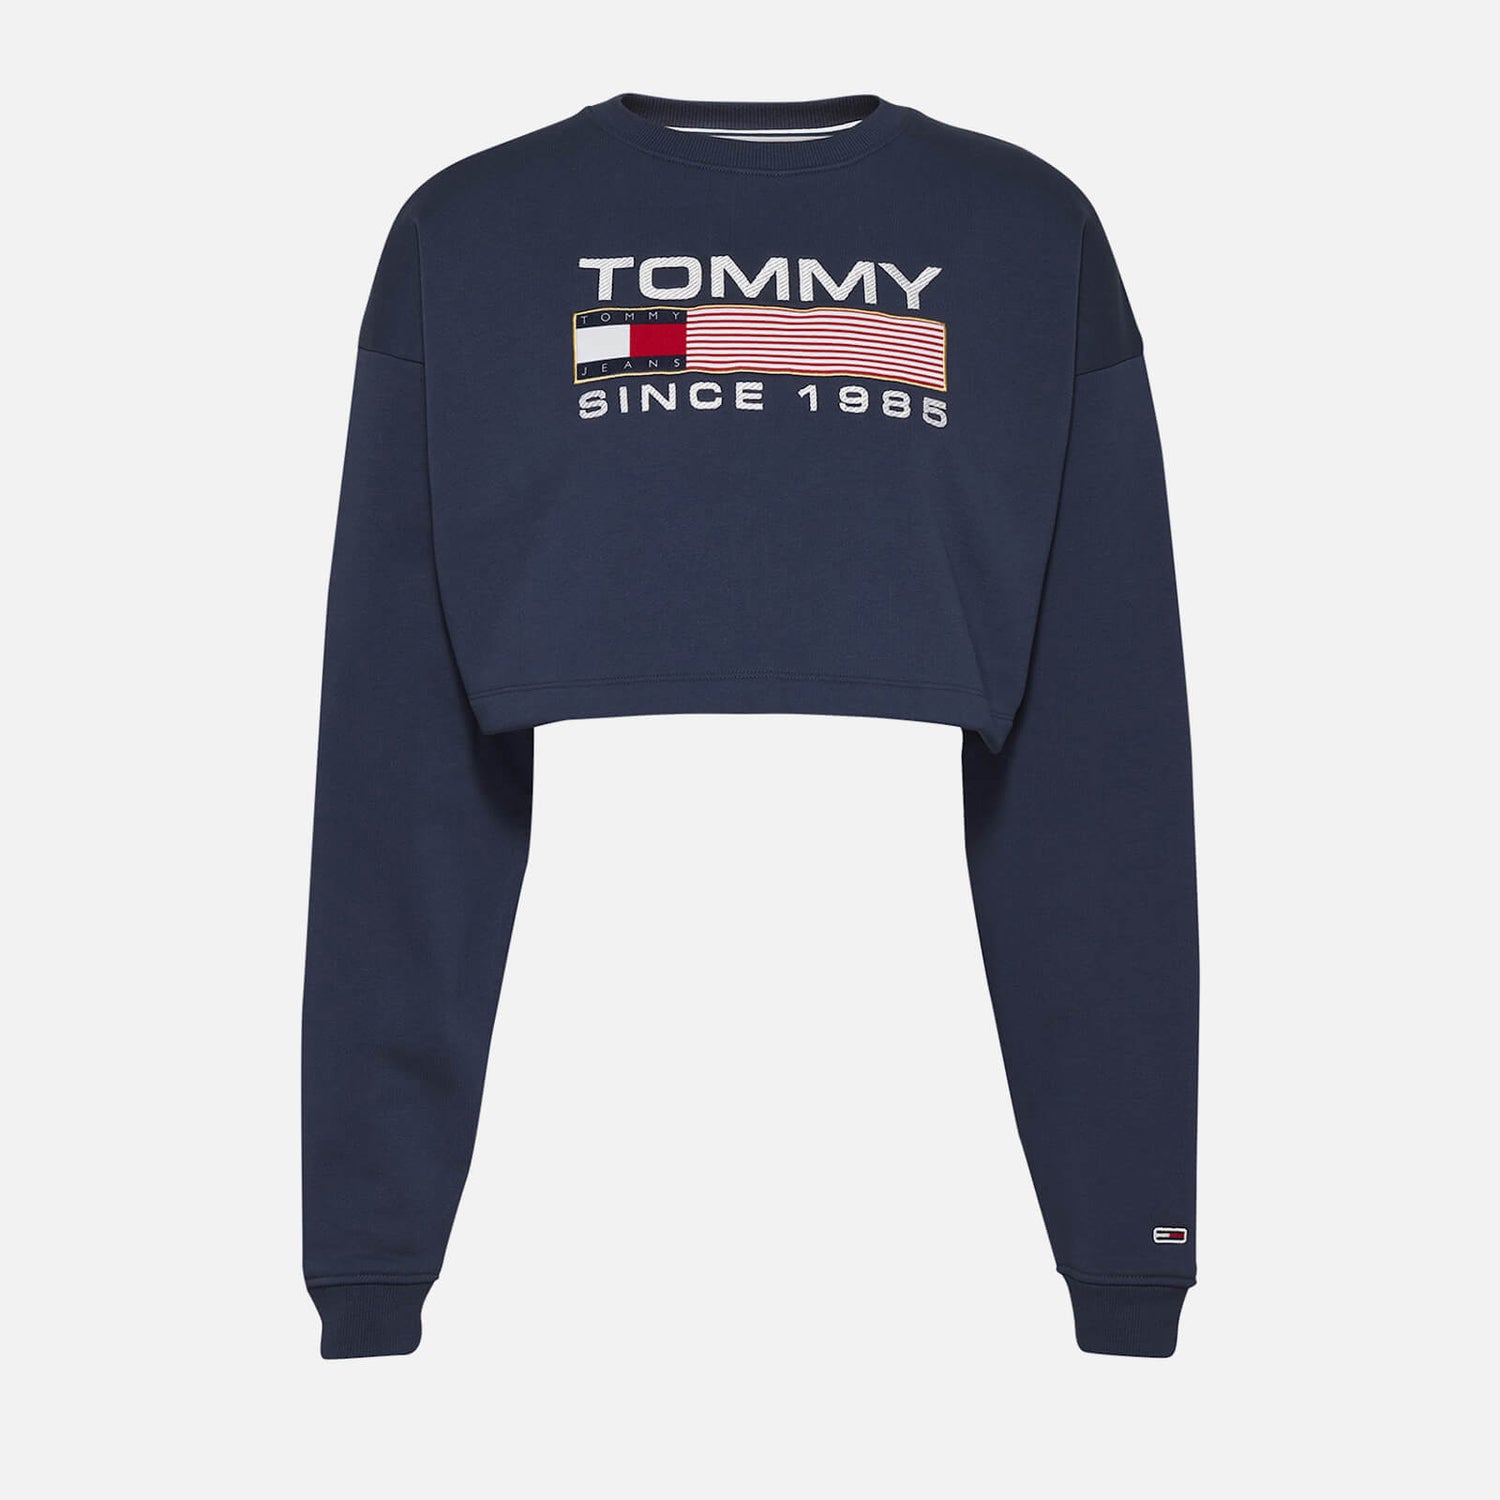 Tommy Jeans Women's Super Crop Top Modern Crew - Twilight Navy - XS